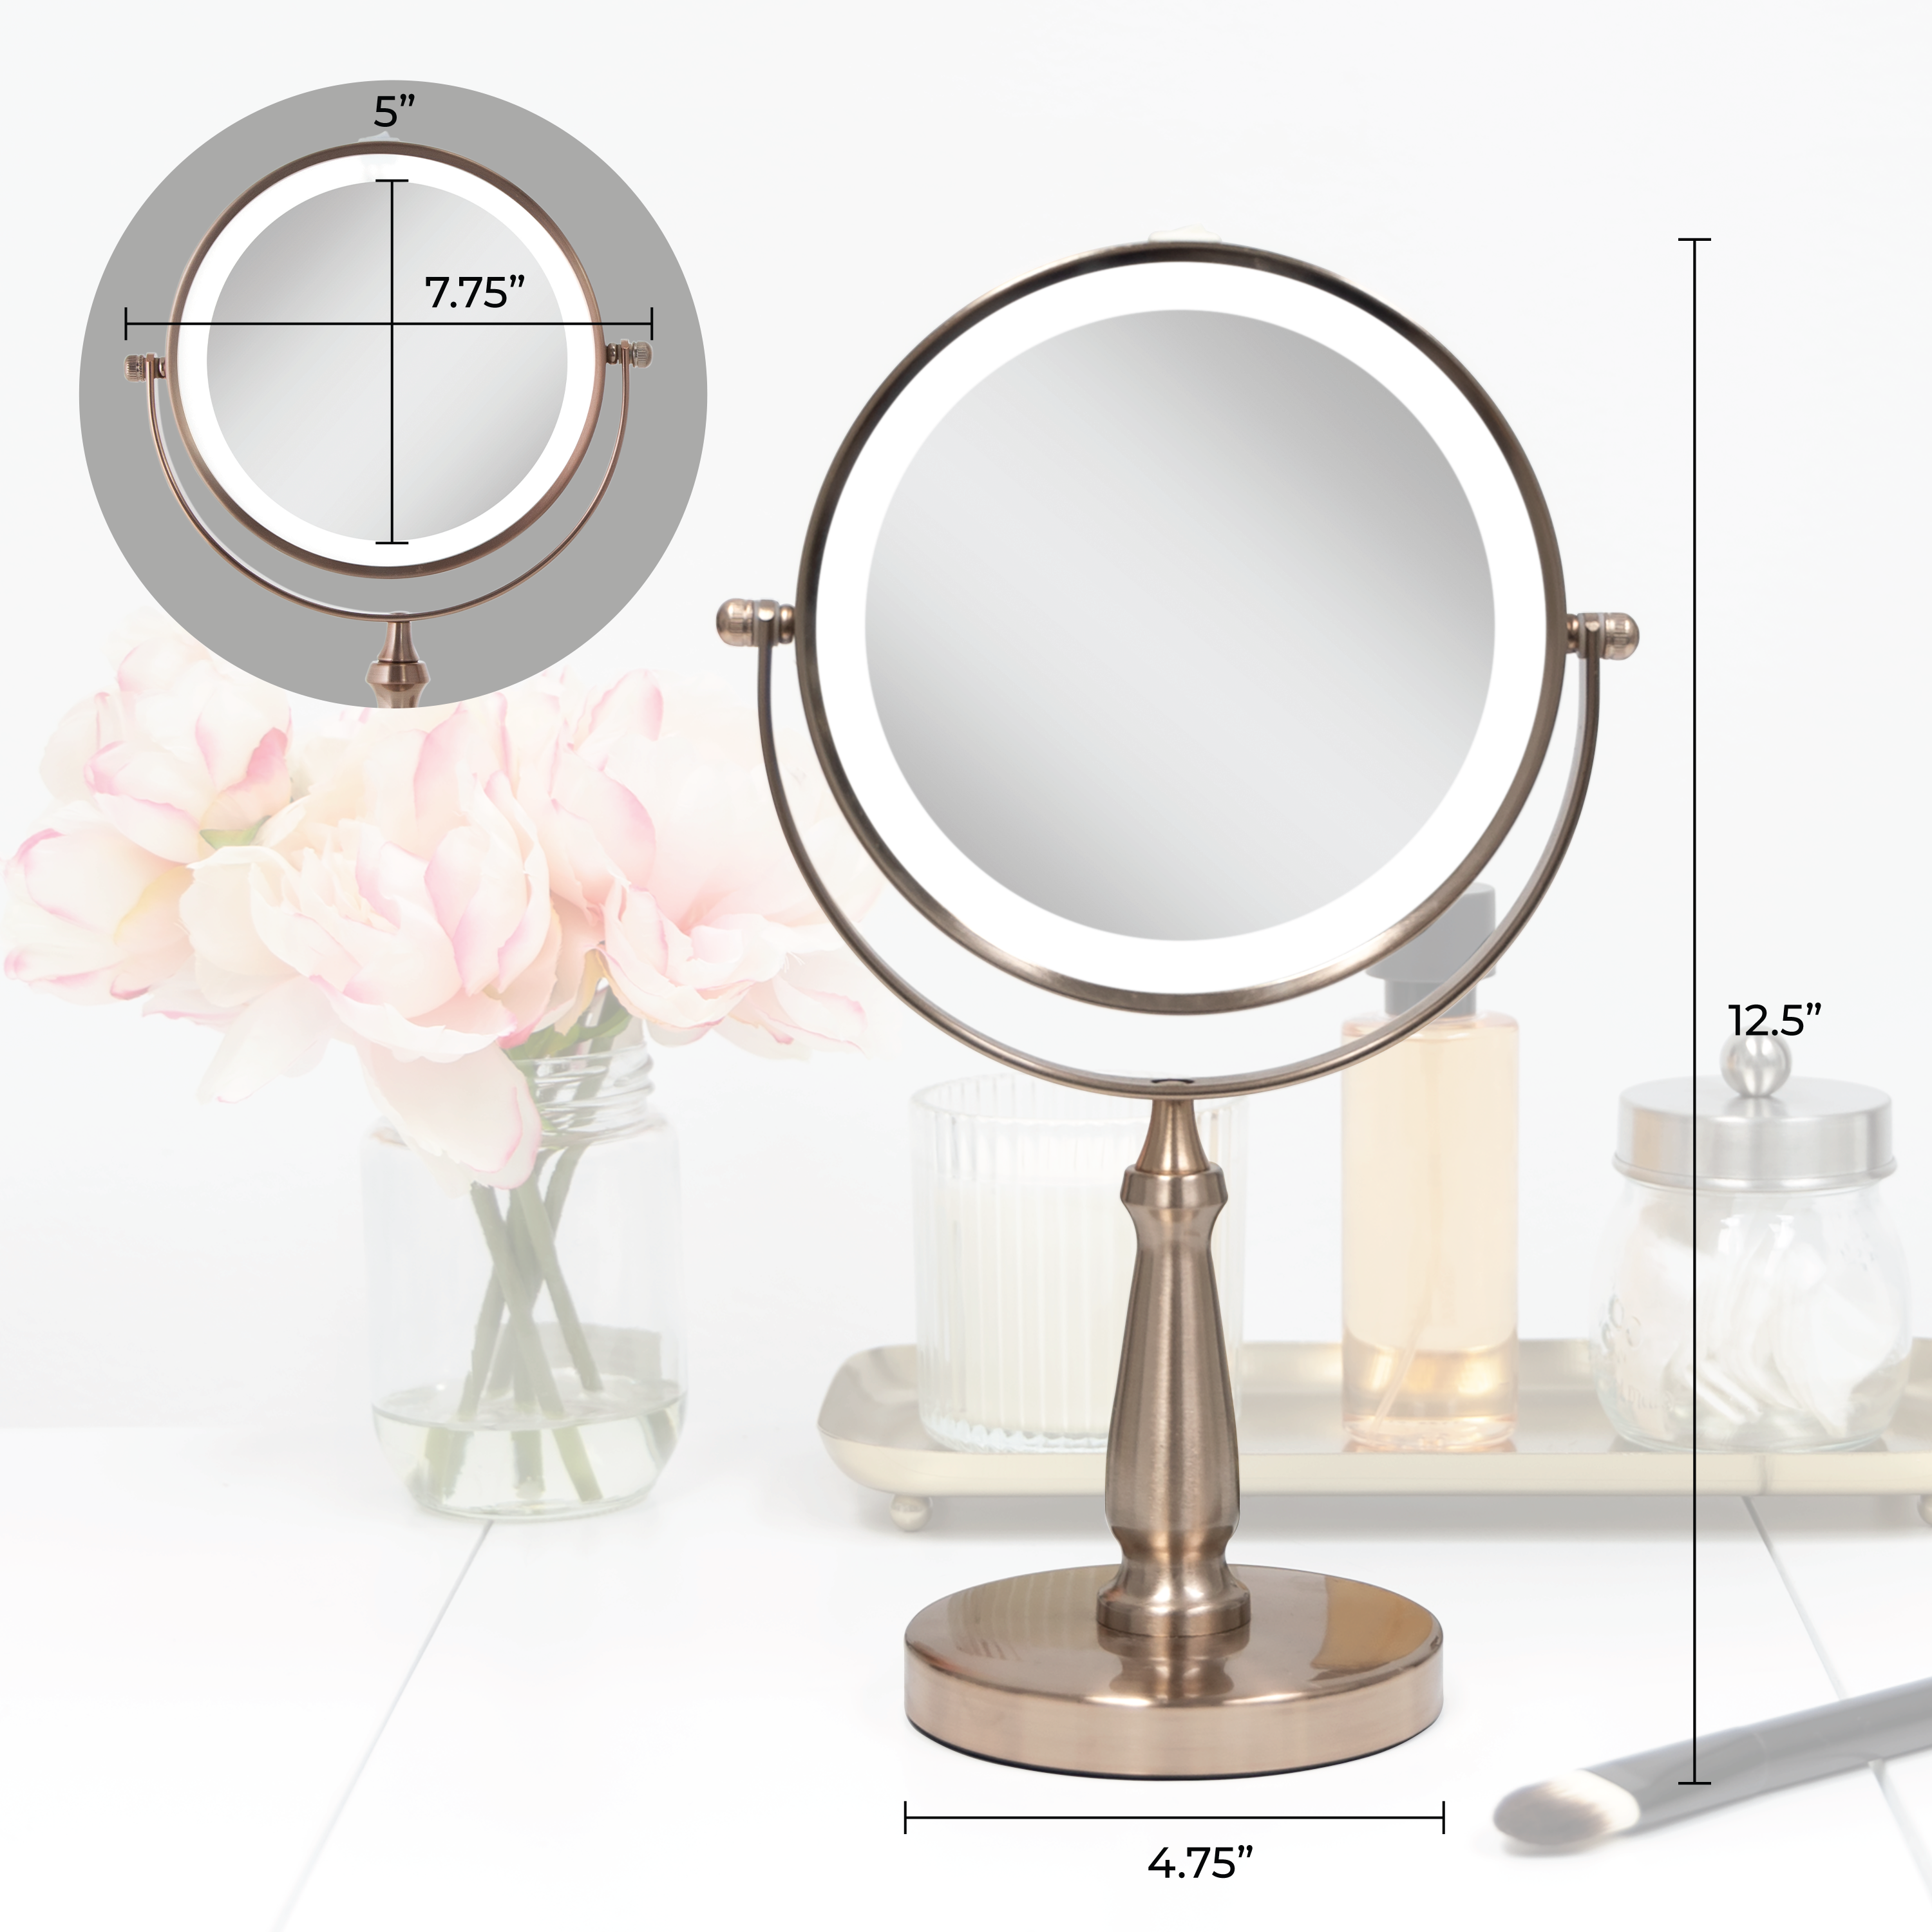 Dressing Table with Sleek, Minimalist Mirror and Lighted Vanity Lights  Stock Illustration - Illustration of vanity, home: 274880499